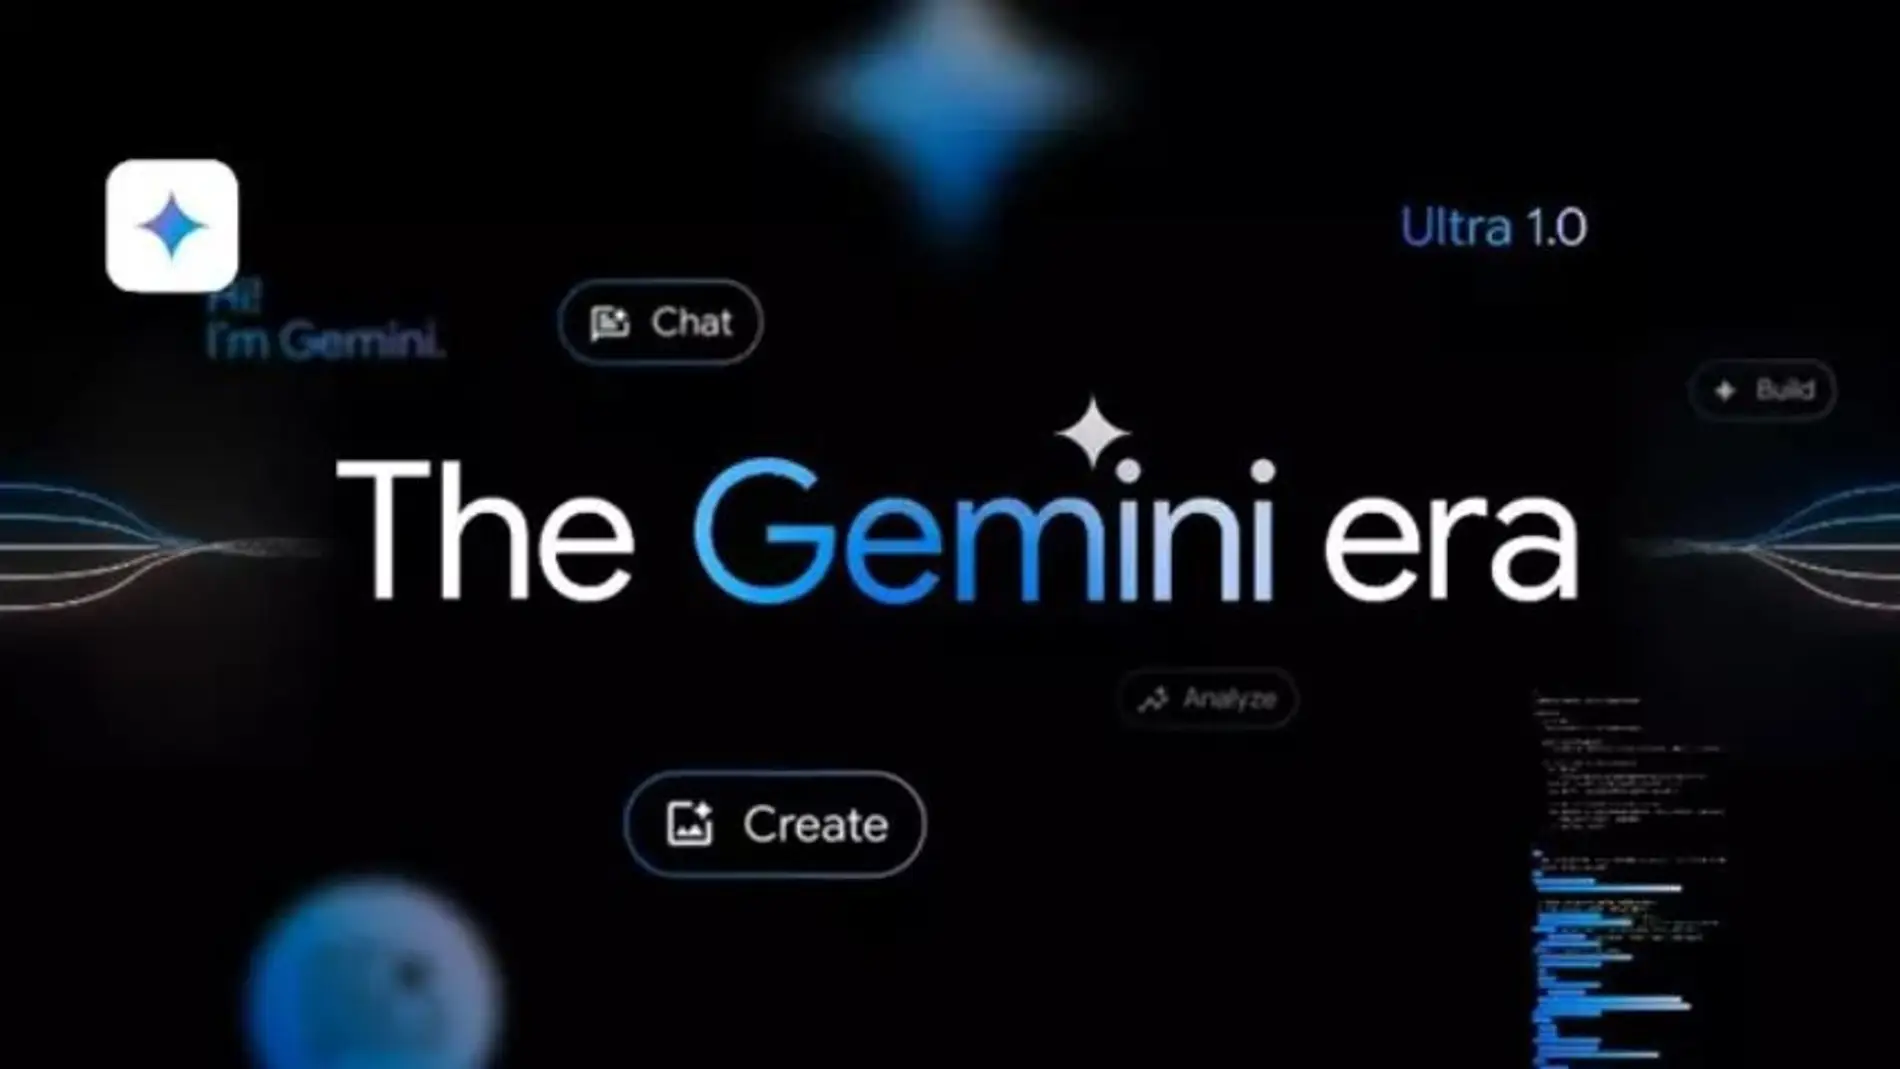 Logo de Google Gemini 